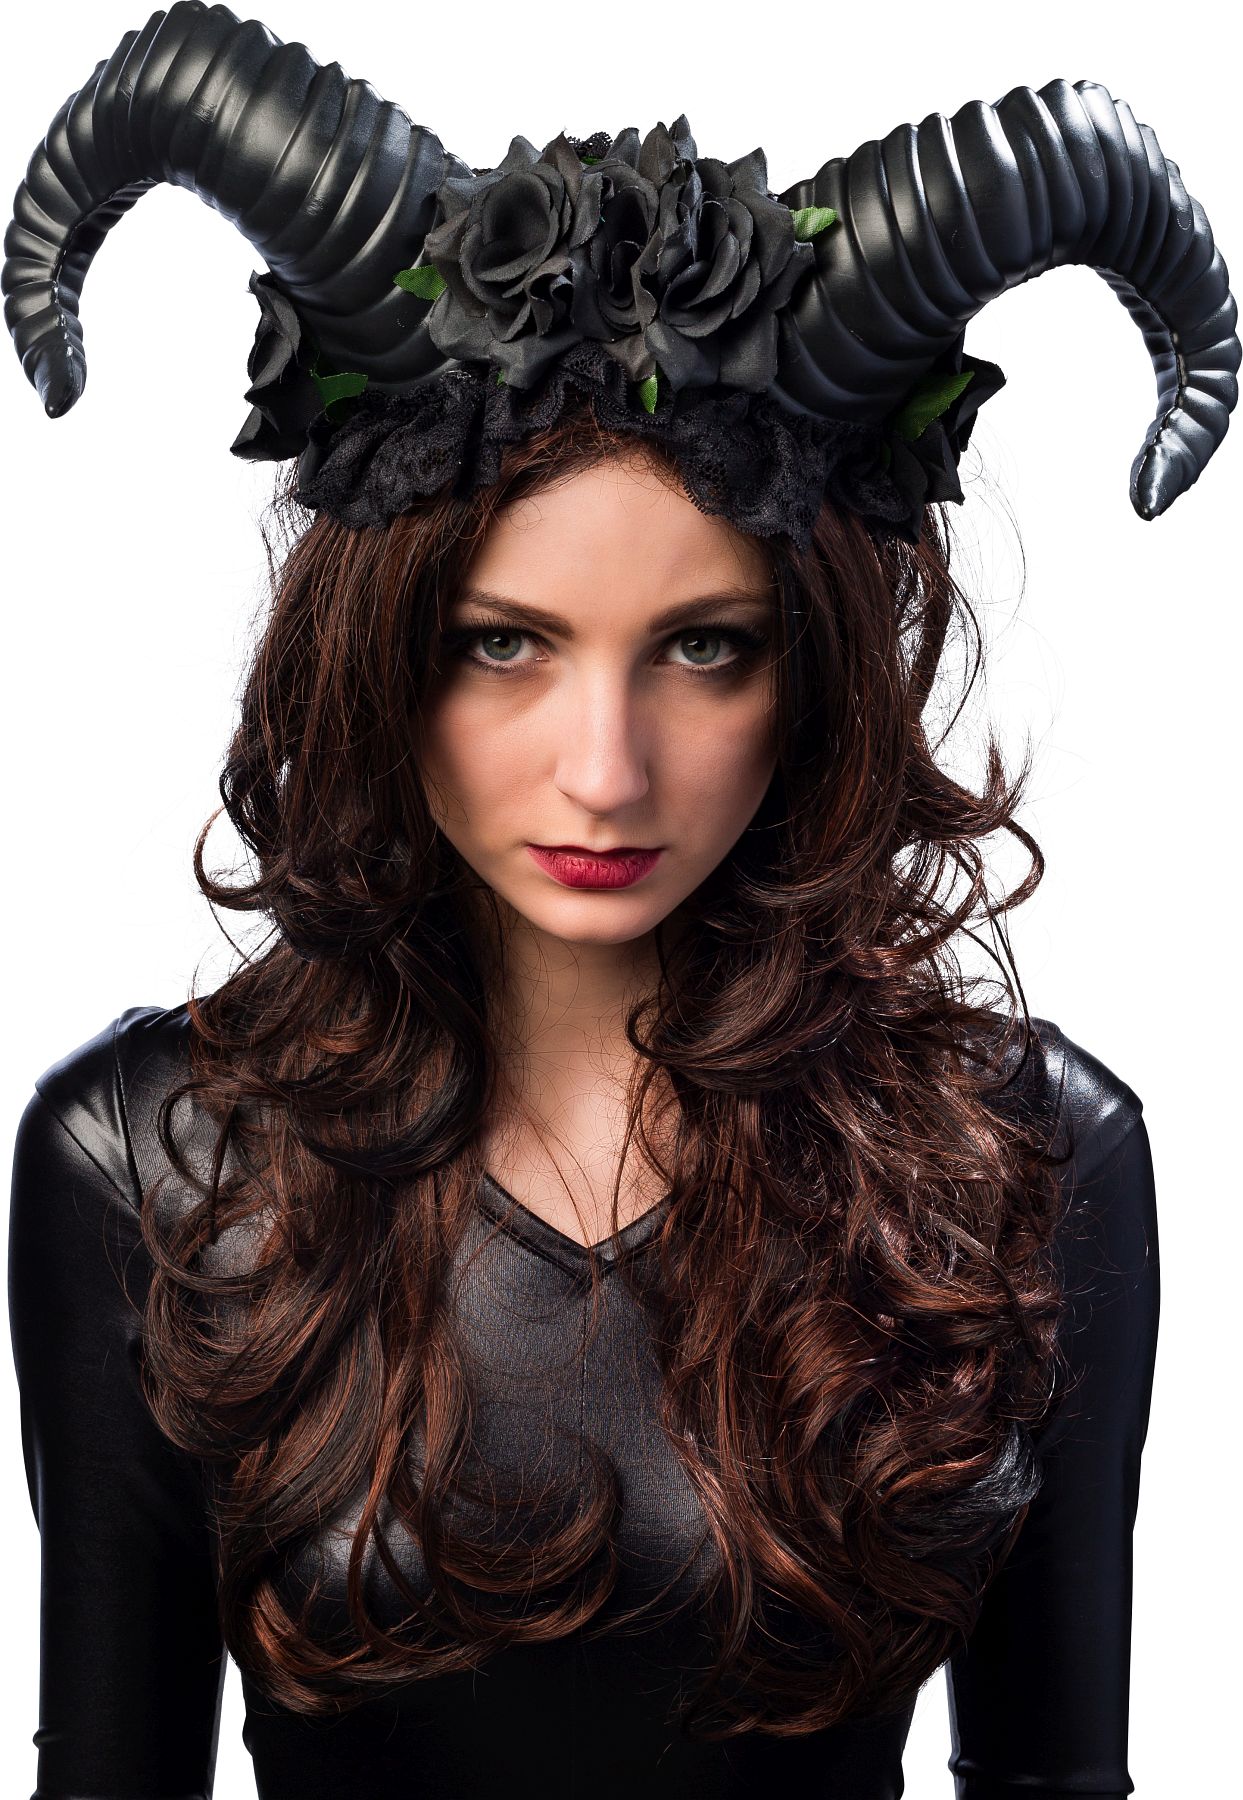 Devil horns with flowers, black